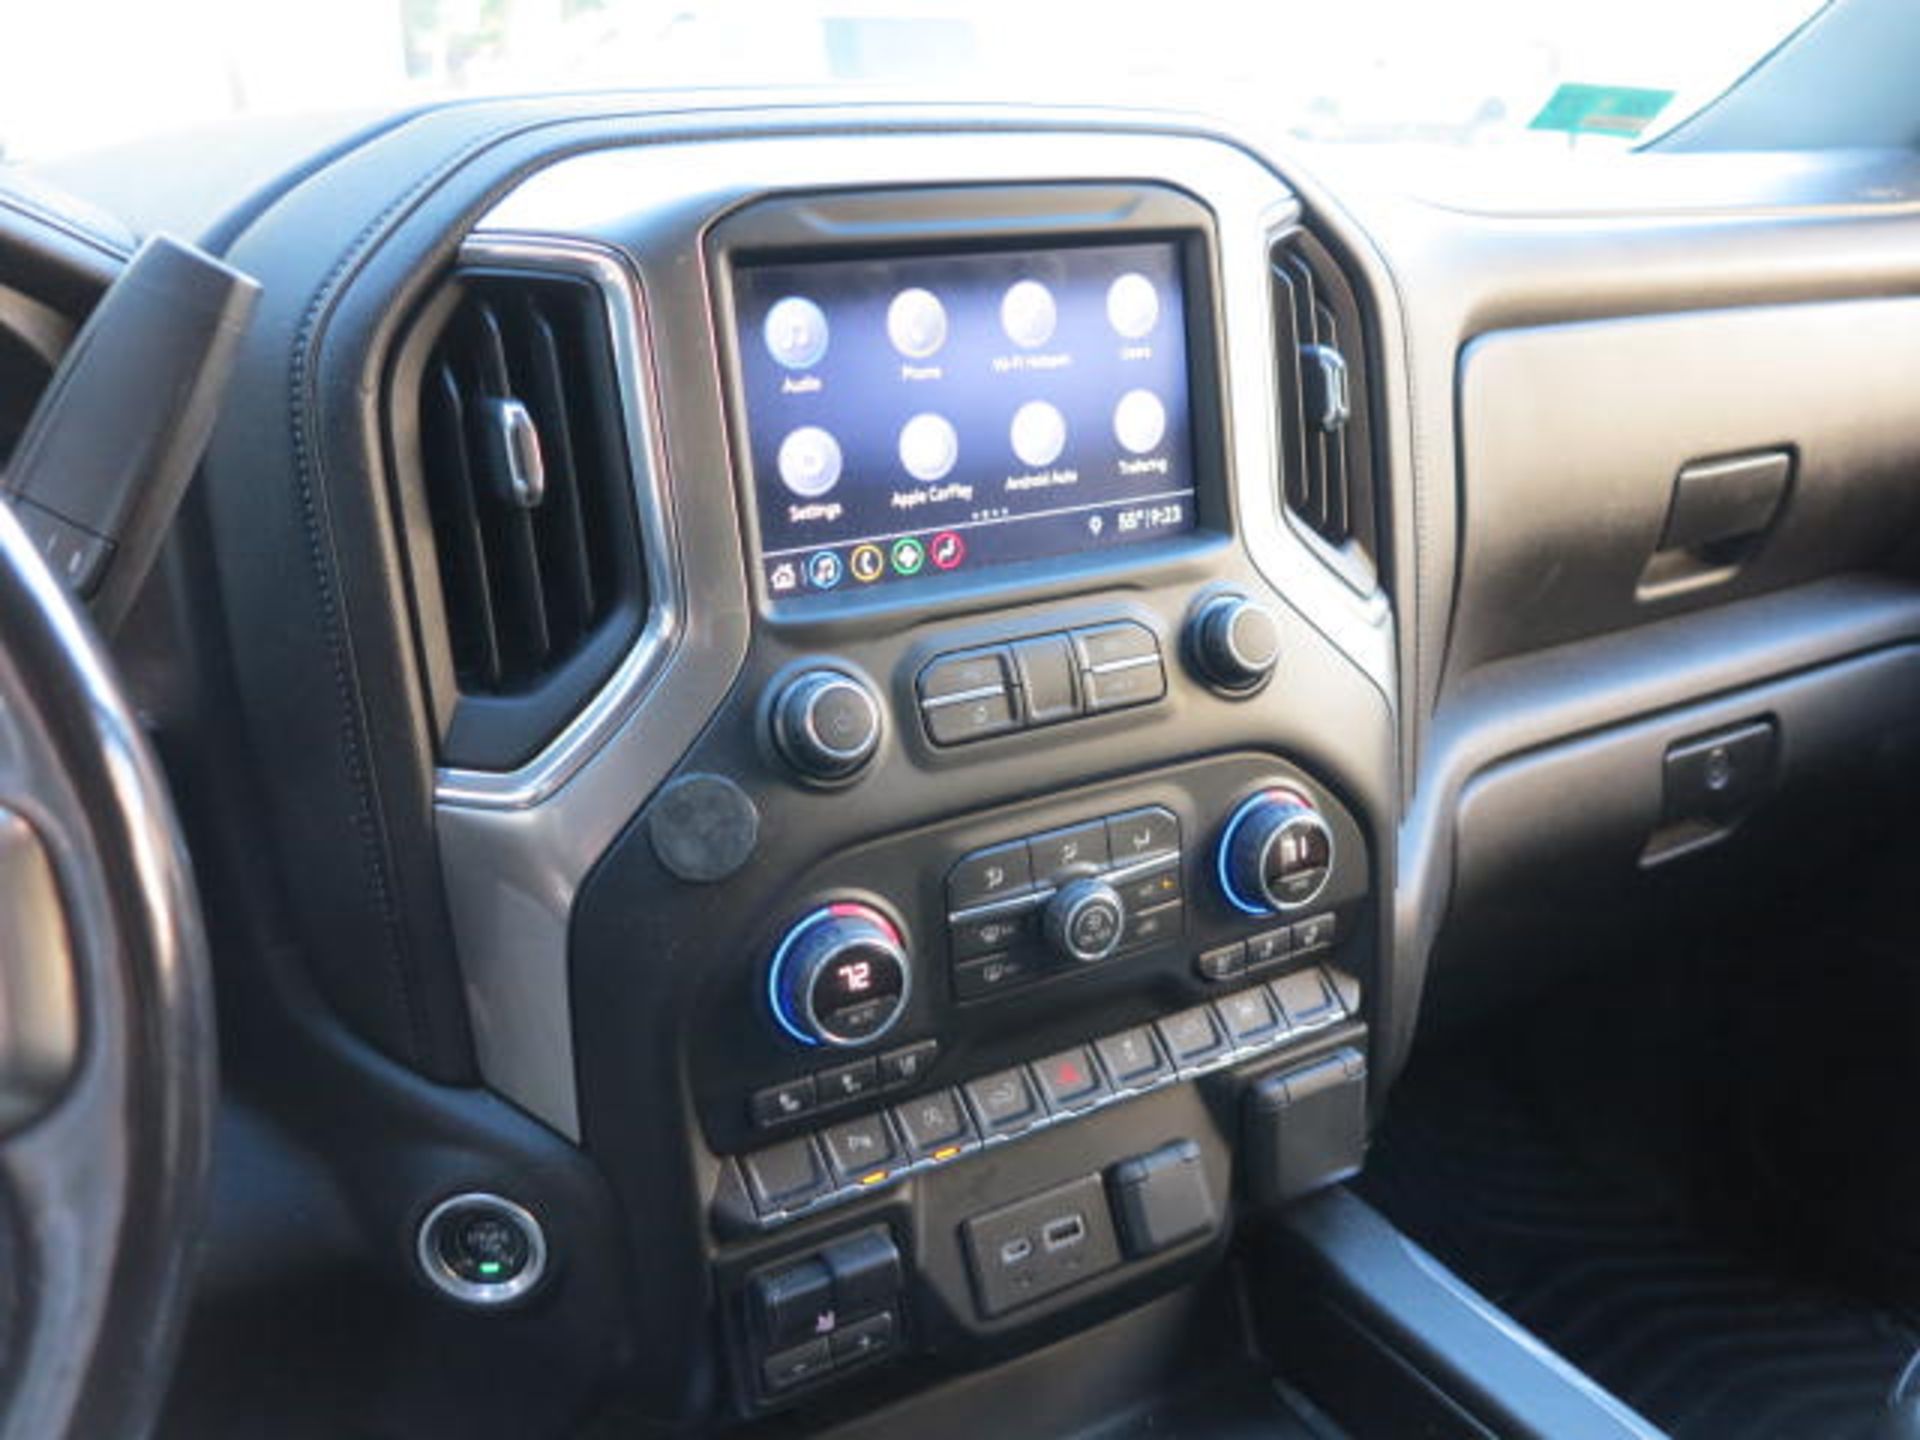 2019 Chevy Silverado 4WD LTZ DBL, 5.3L Eco-Tech V8 with Transmission, 8 Speed Automatic, LTZ Plus - Image 8 of 13